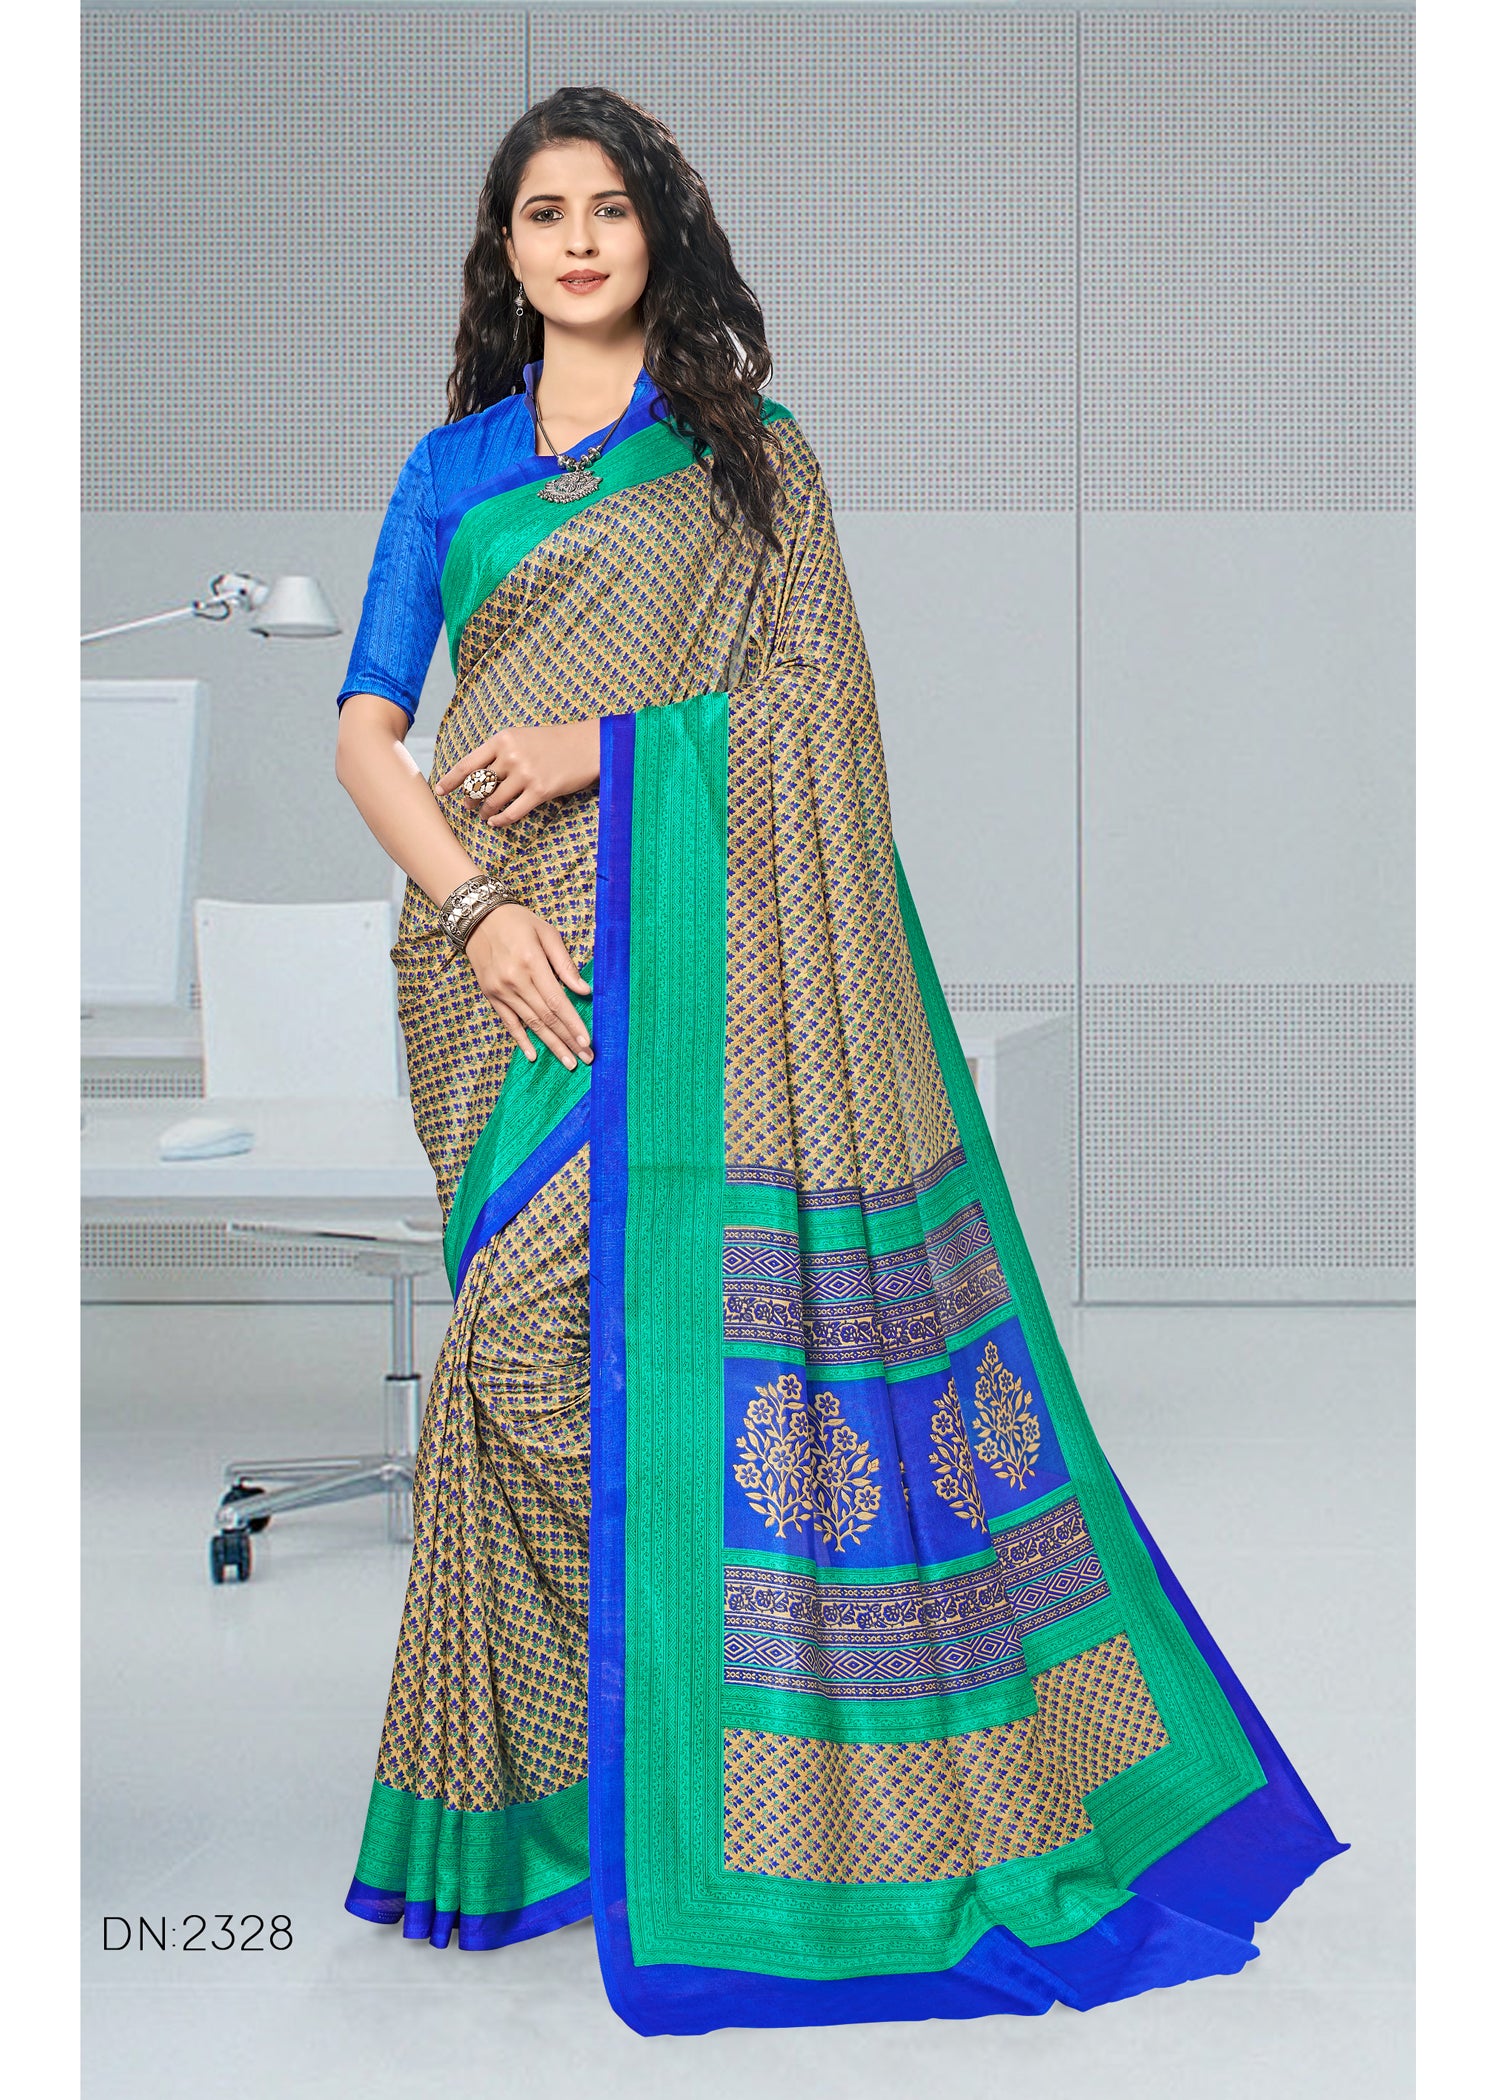 Vimla Women's Turquoise Malgudi Art Silk Uniform Saree with Blouse Piece (2328_Turquoise)